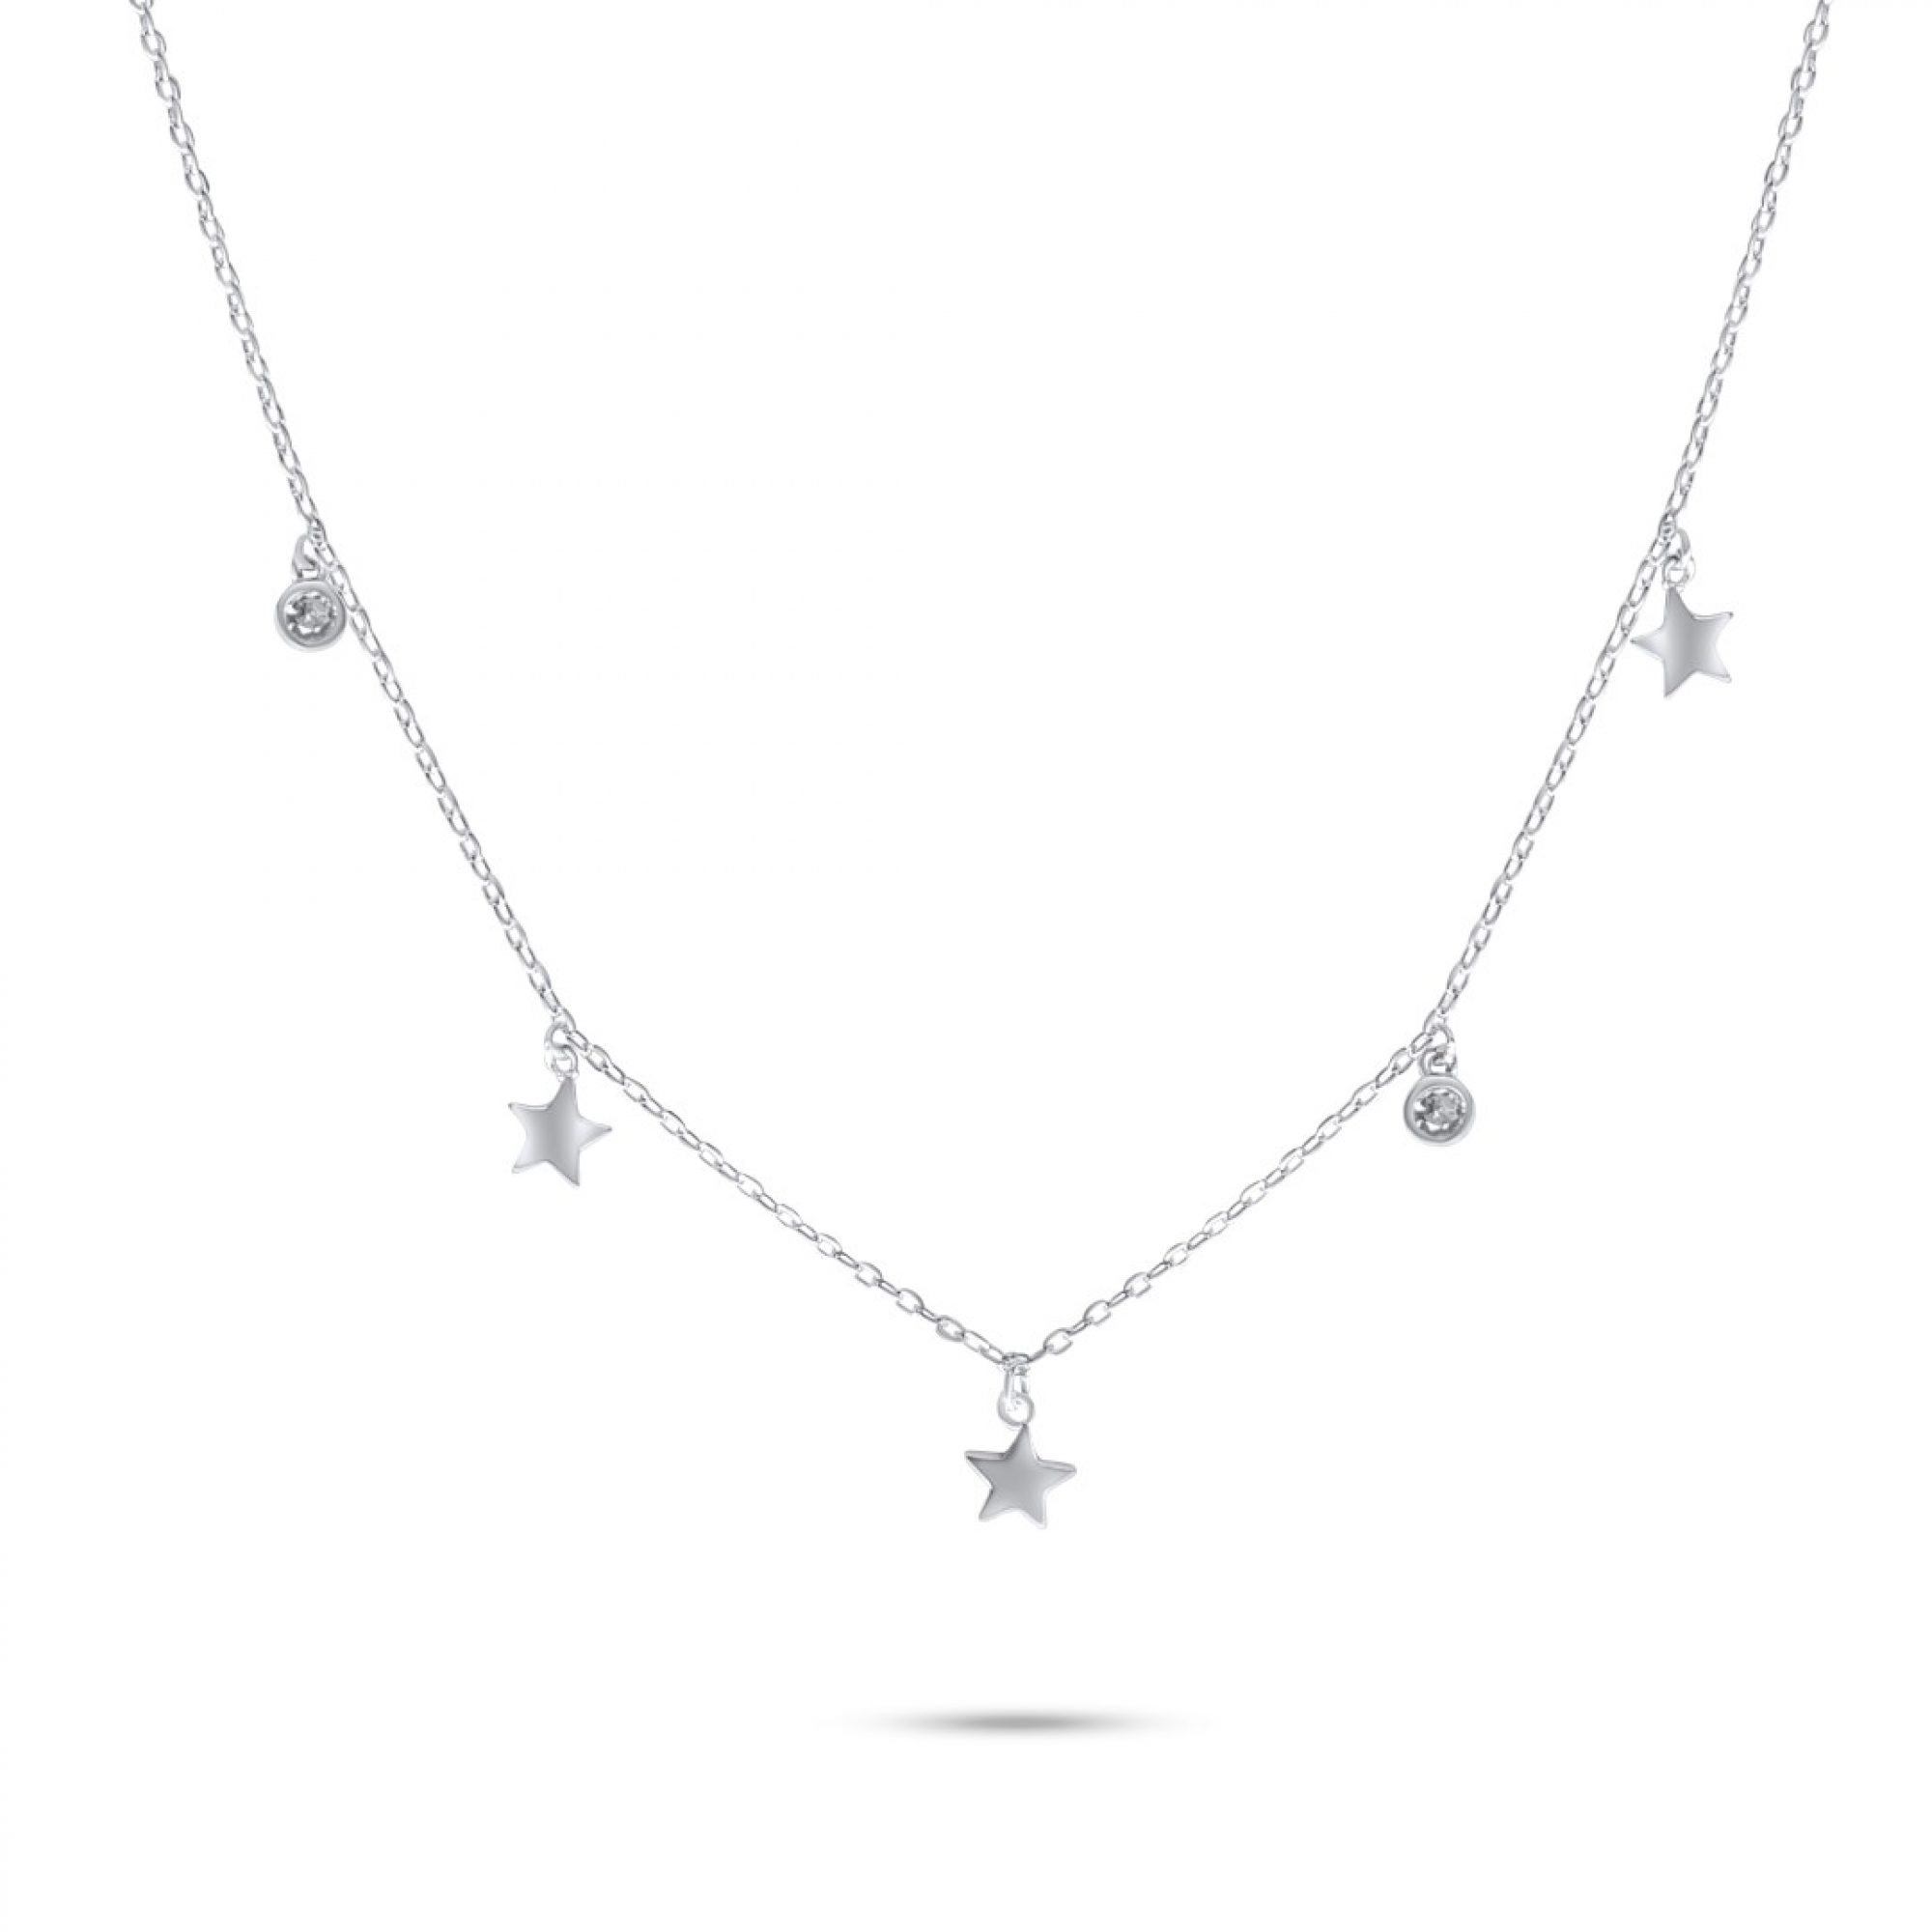 Dangle necklace with zircon stones